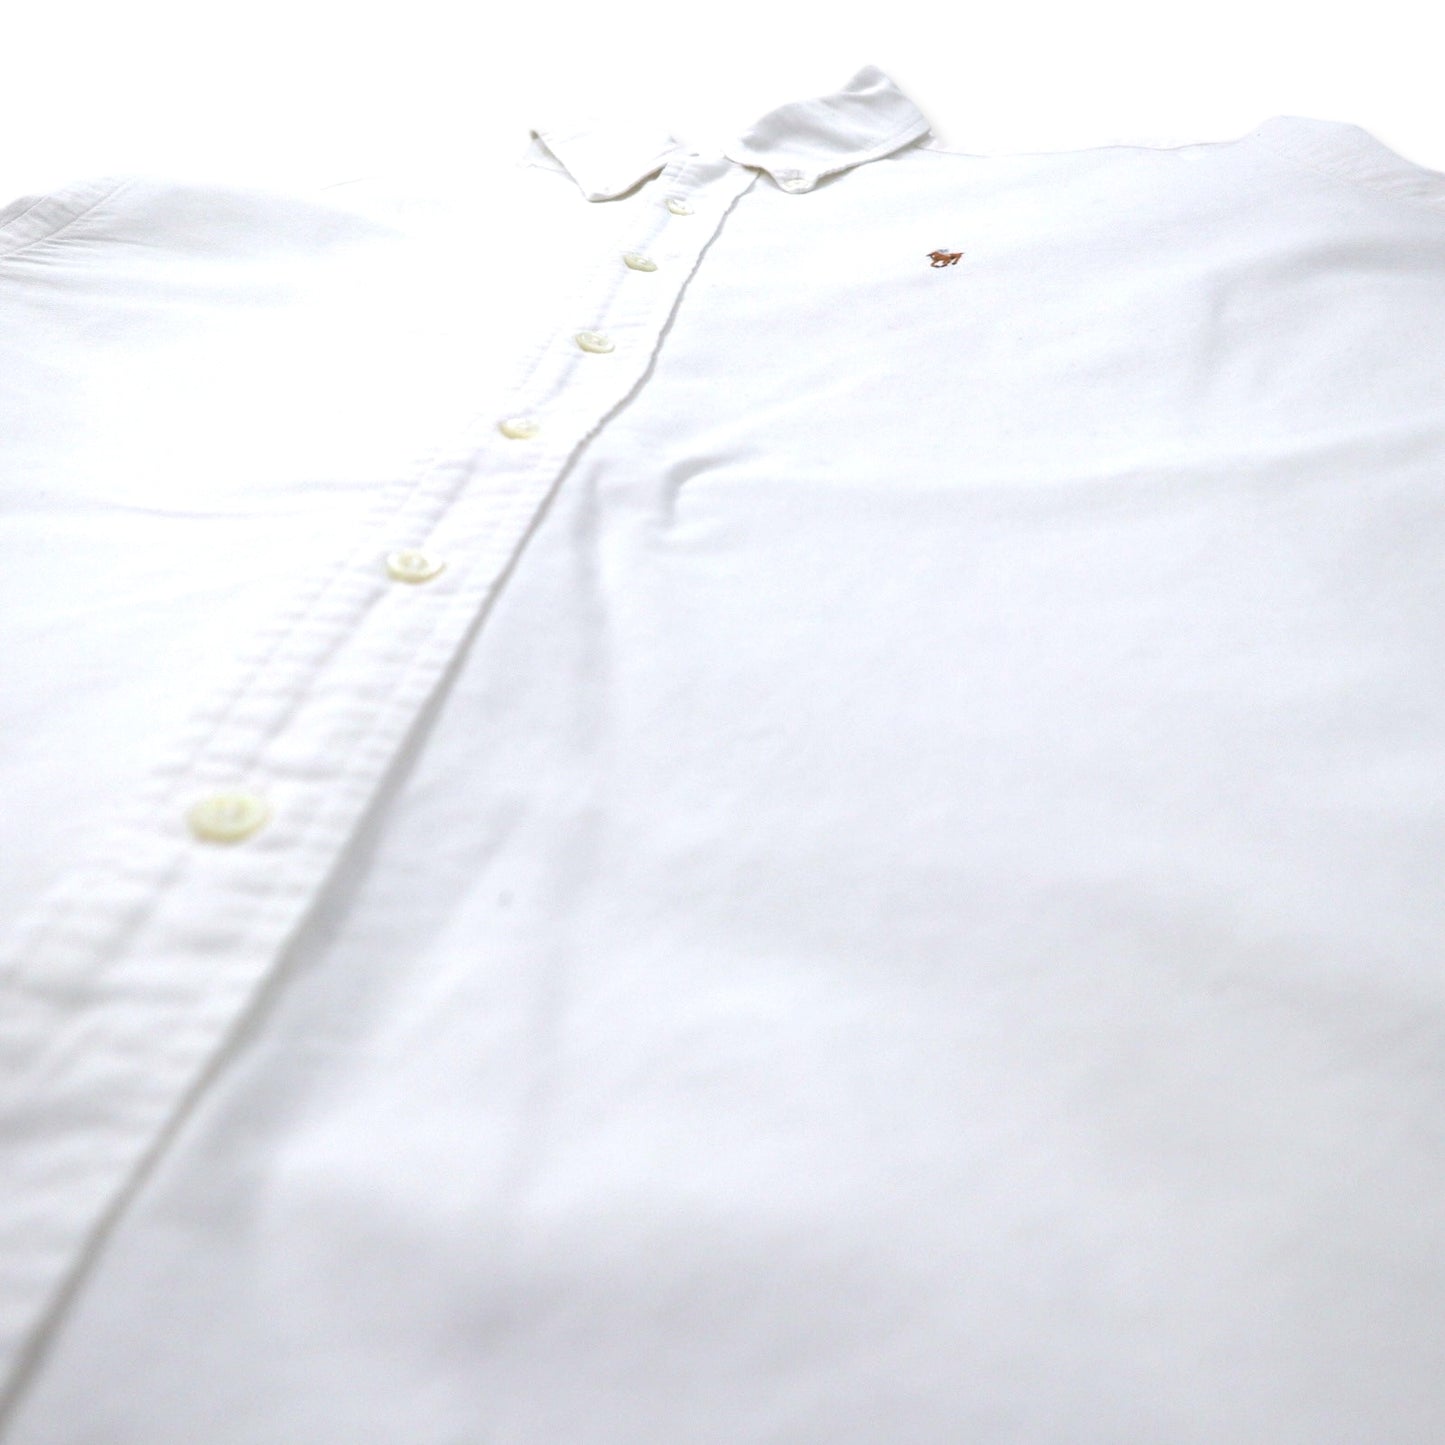 Ralph Lauren オックスフォード ボタンダウンシャツ 17.5-35 ホワイト コットン スモールポニー刺繍 ビッグサイズ